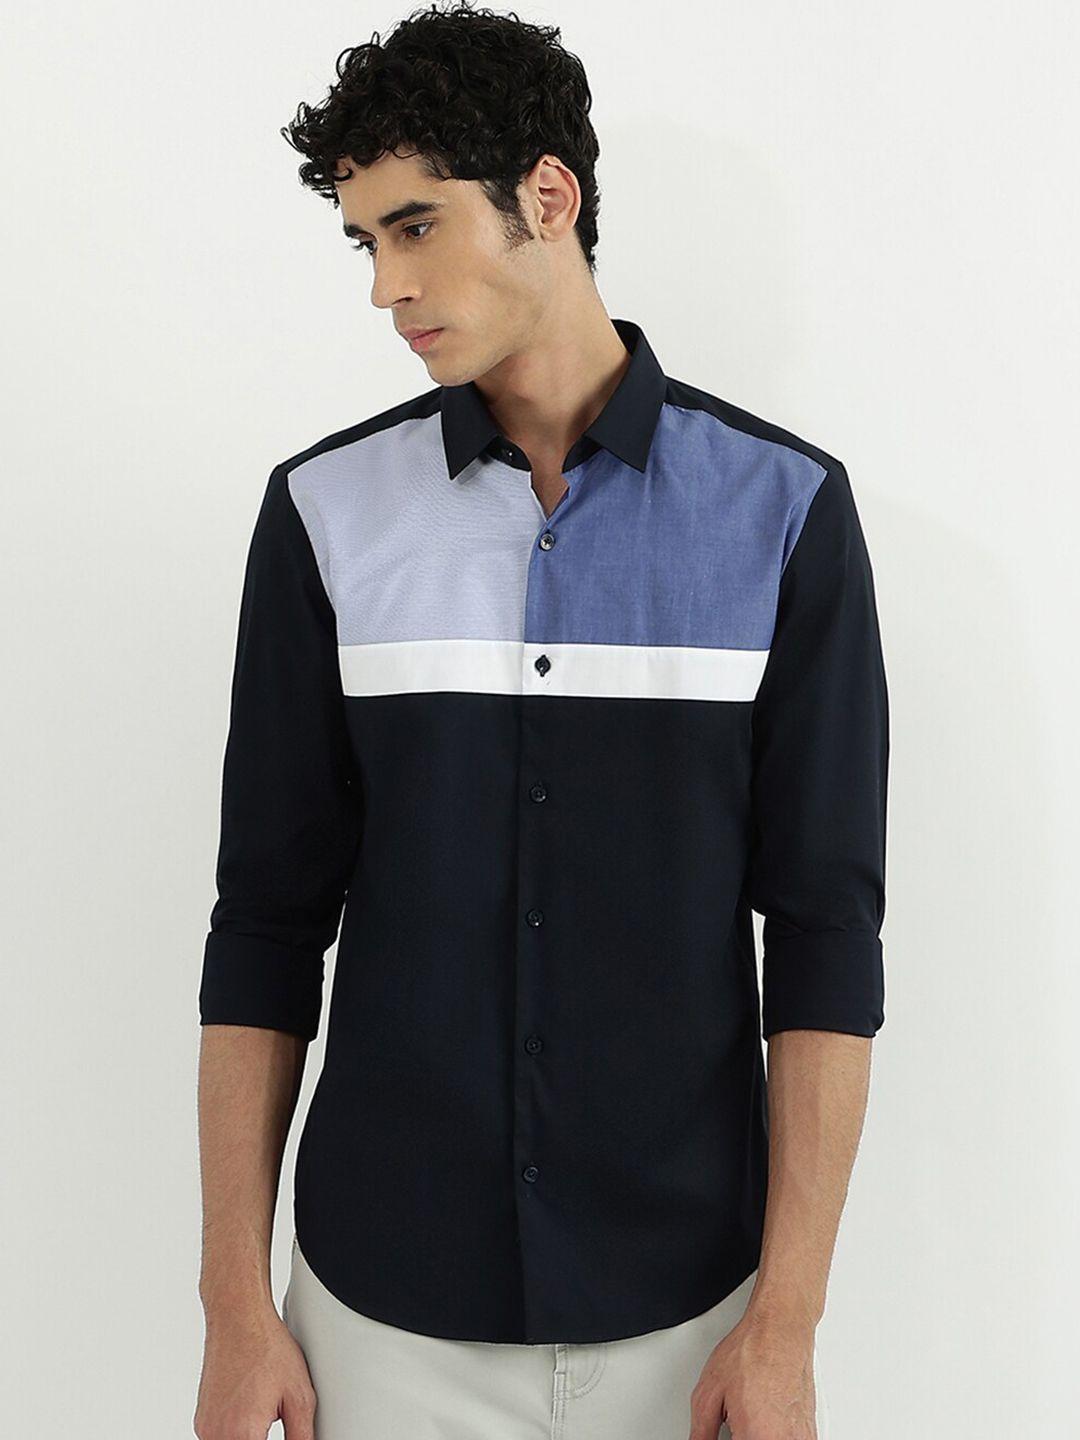 united colors of benetton men black & blue slim fit colourblocked casual shirt